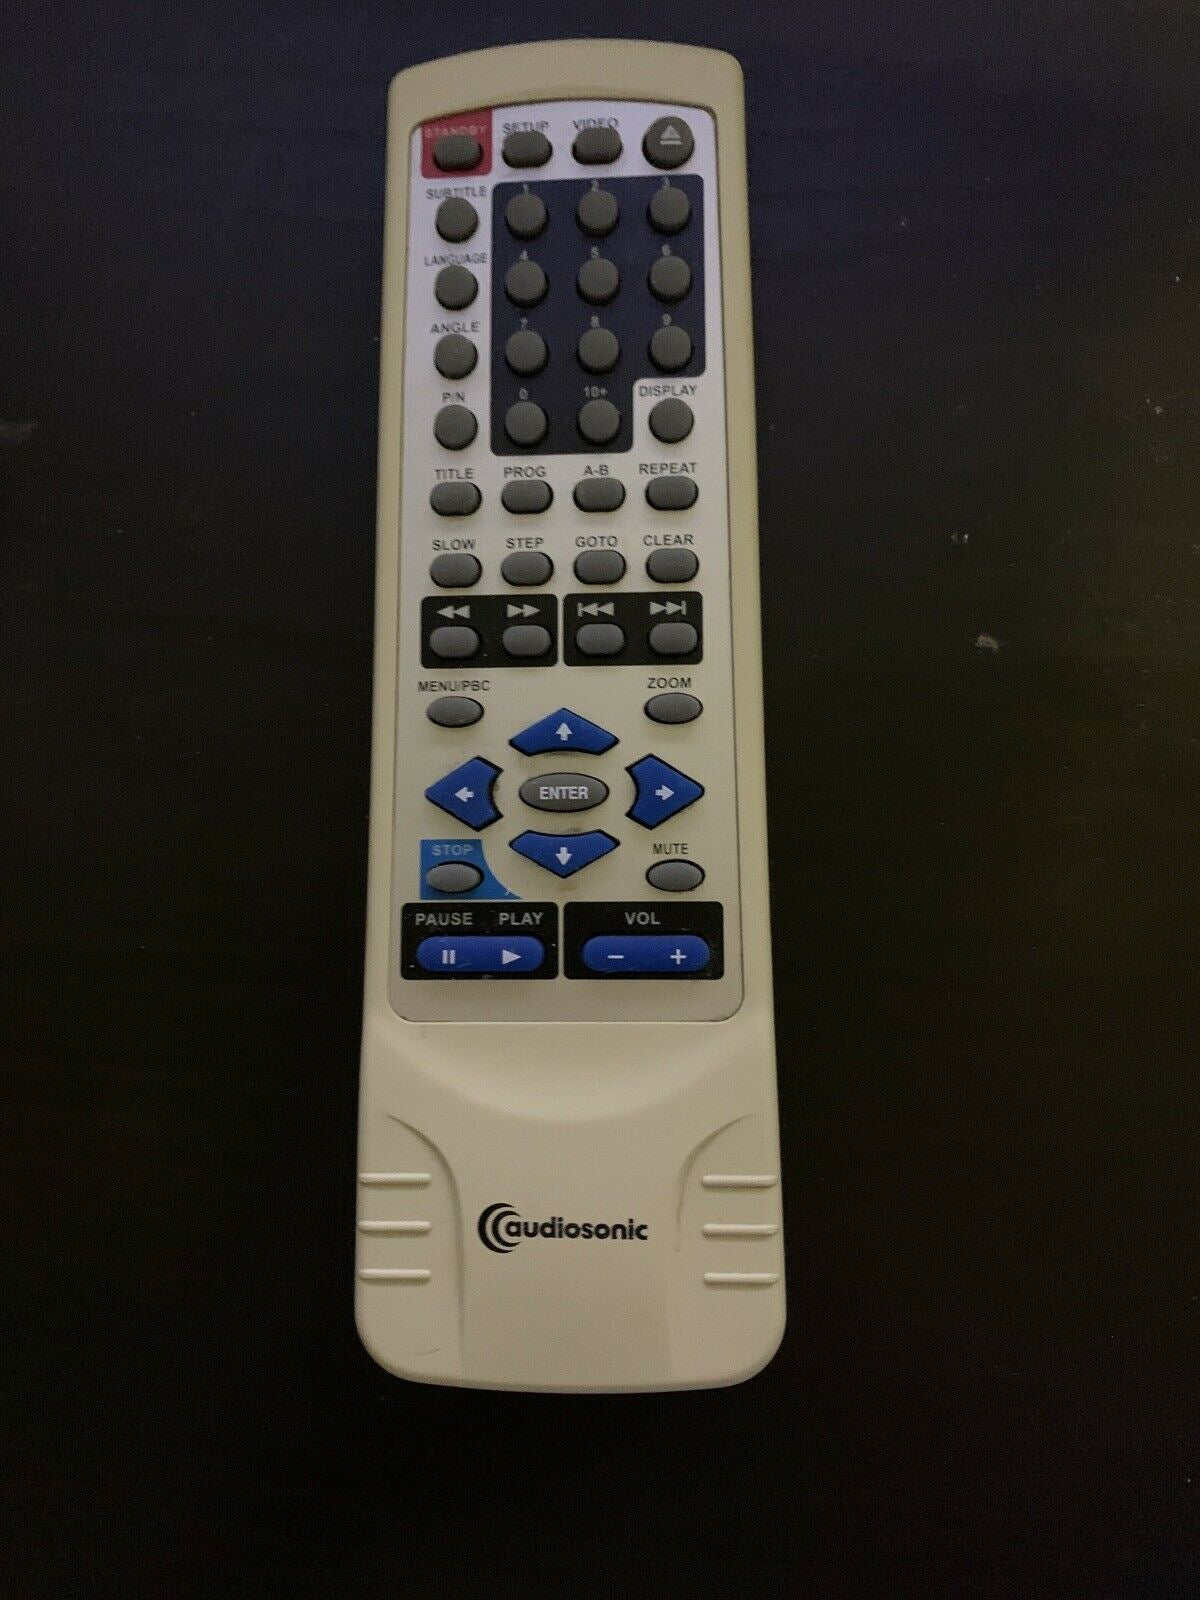 GENUINE Audiosonic JX-2008B Remote Control